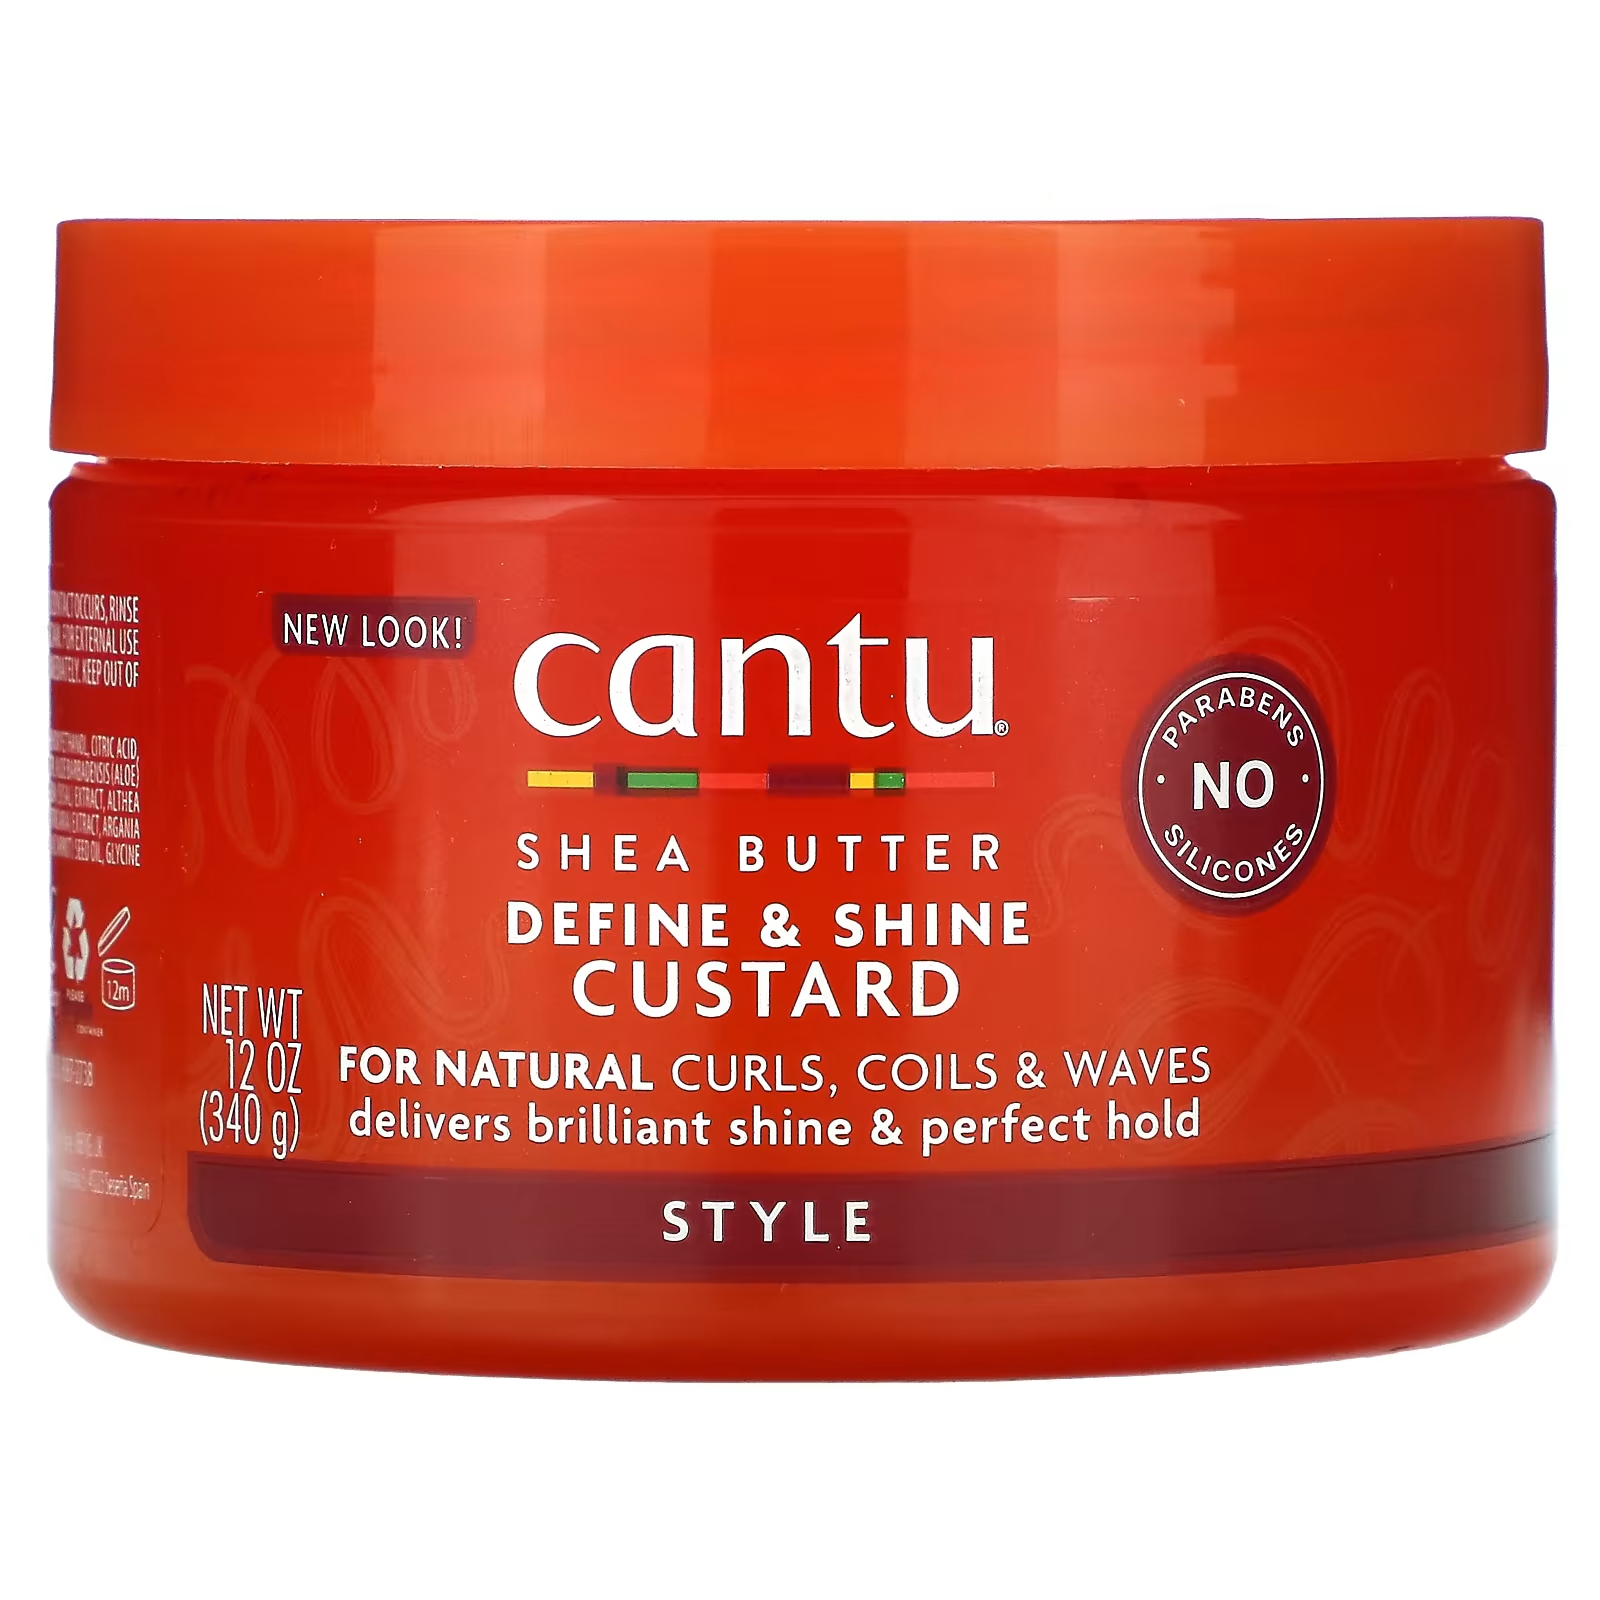 Масло ши Cantu Define & Shine Custard, 12 унций (340 г) cantu масло ши для натуральных волос несмываемый кондиционер 340 г 12 унций